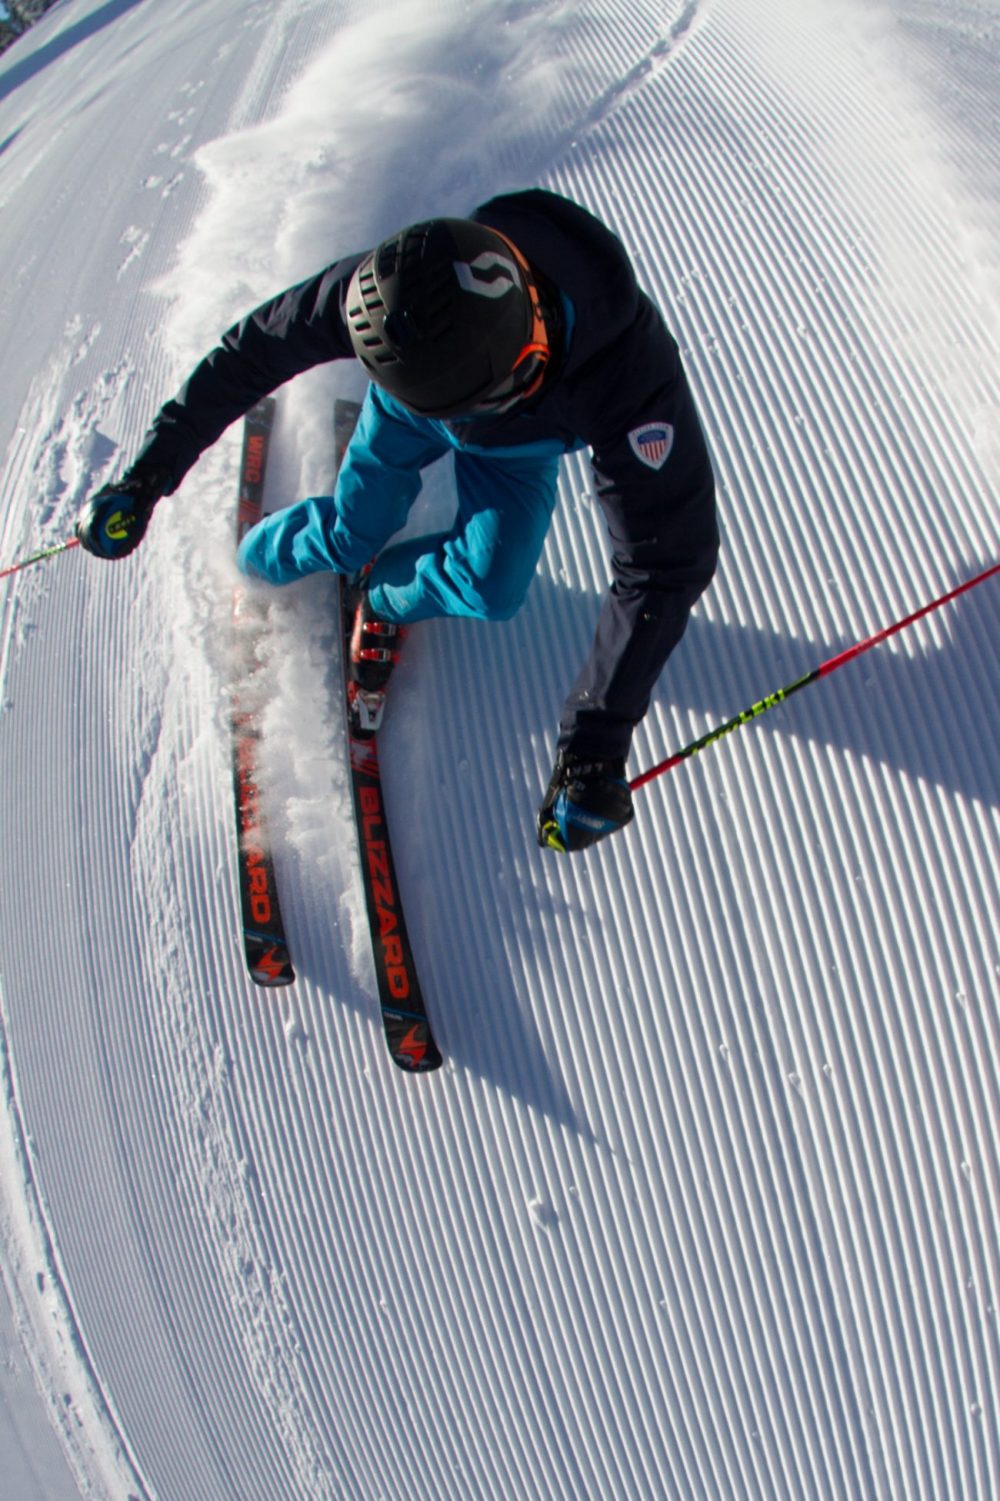 SnoFolio Announces Partnership with U.S. Collegiate Ski and Snowboard Association. Photo courtesy of SnoFolio. 